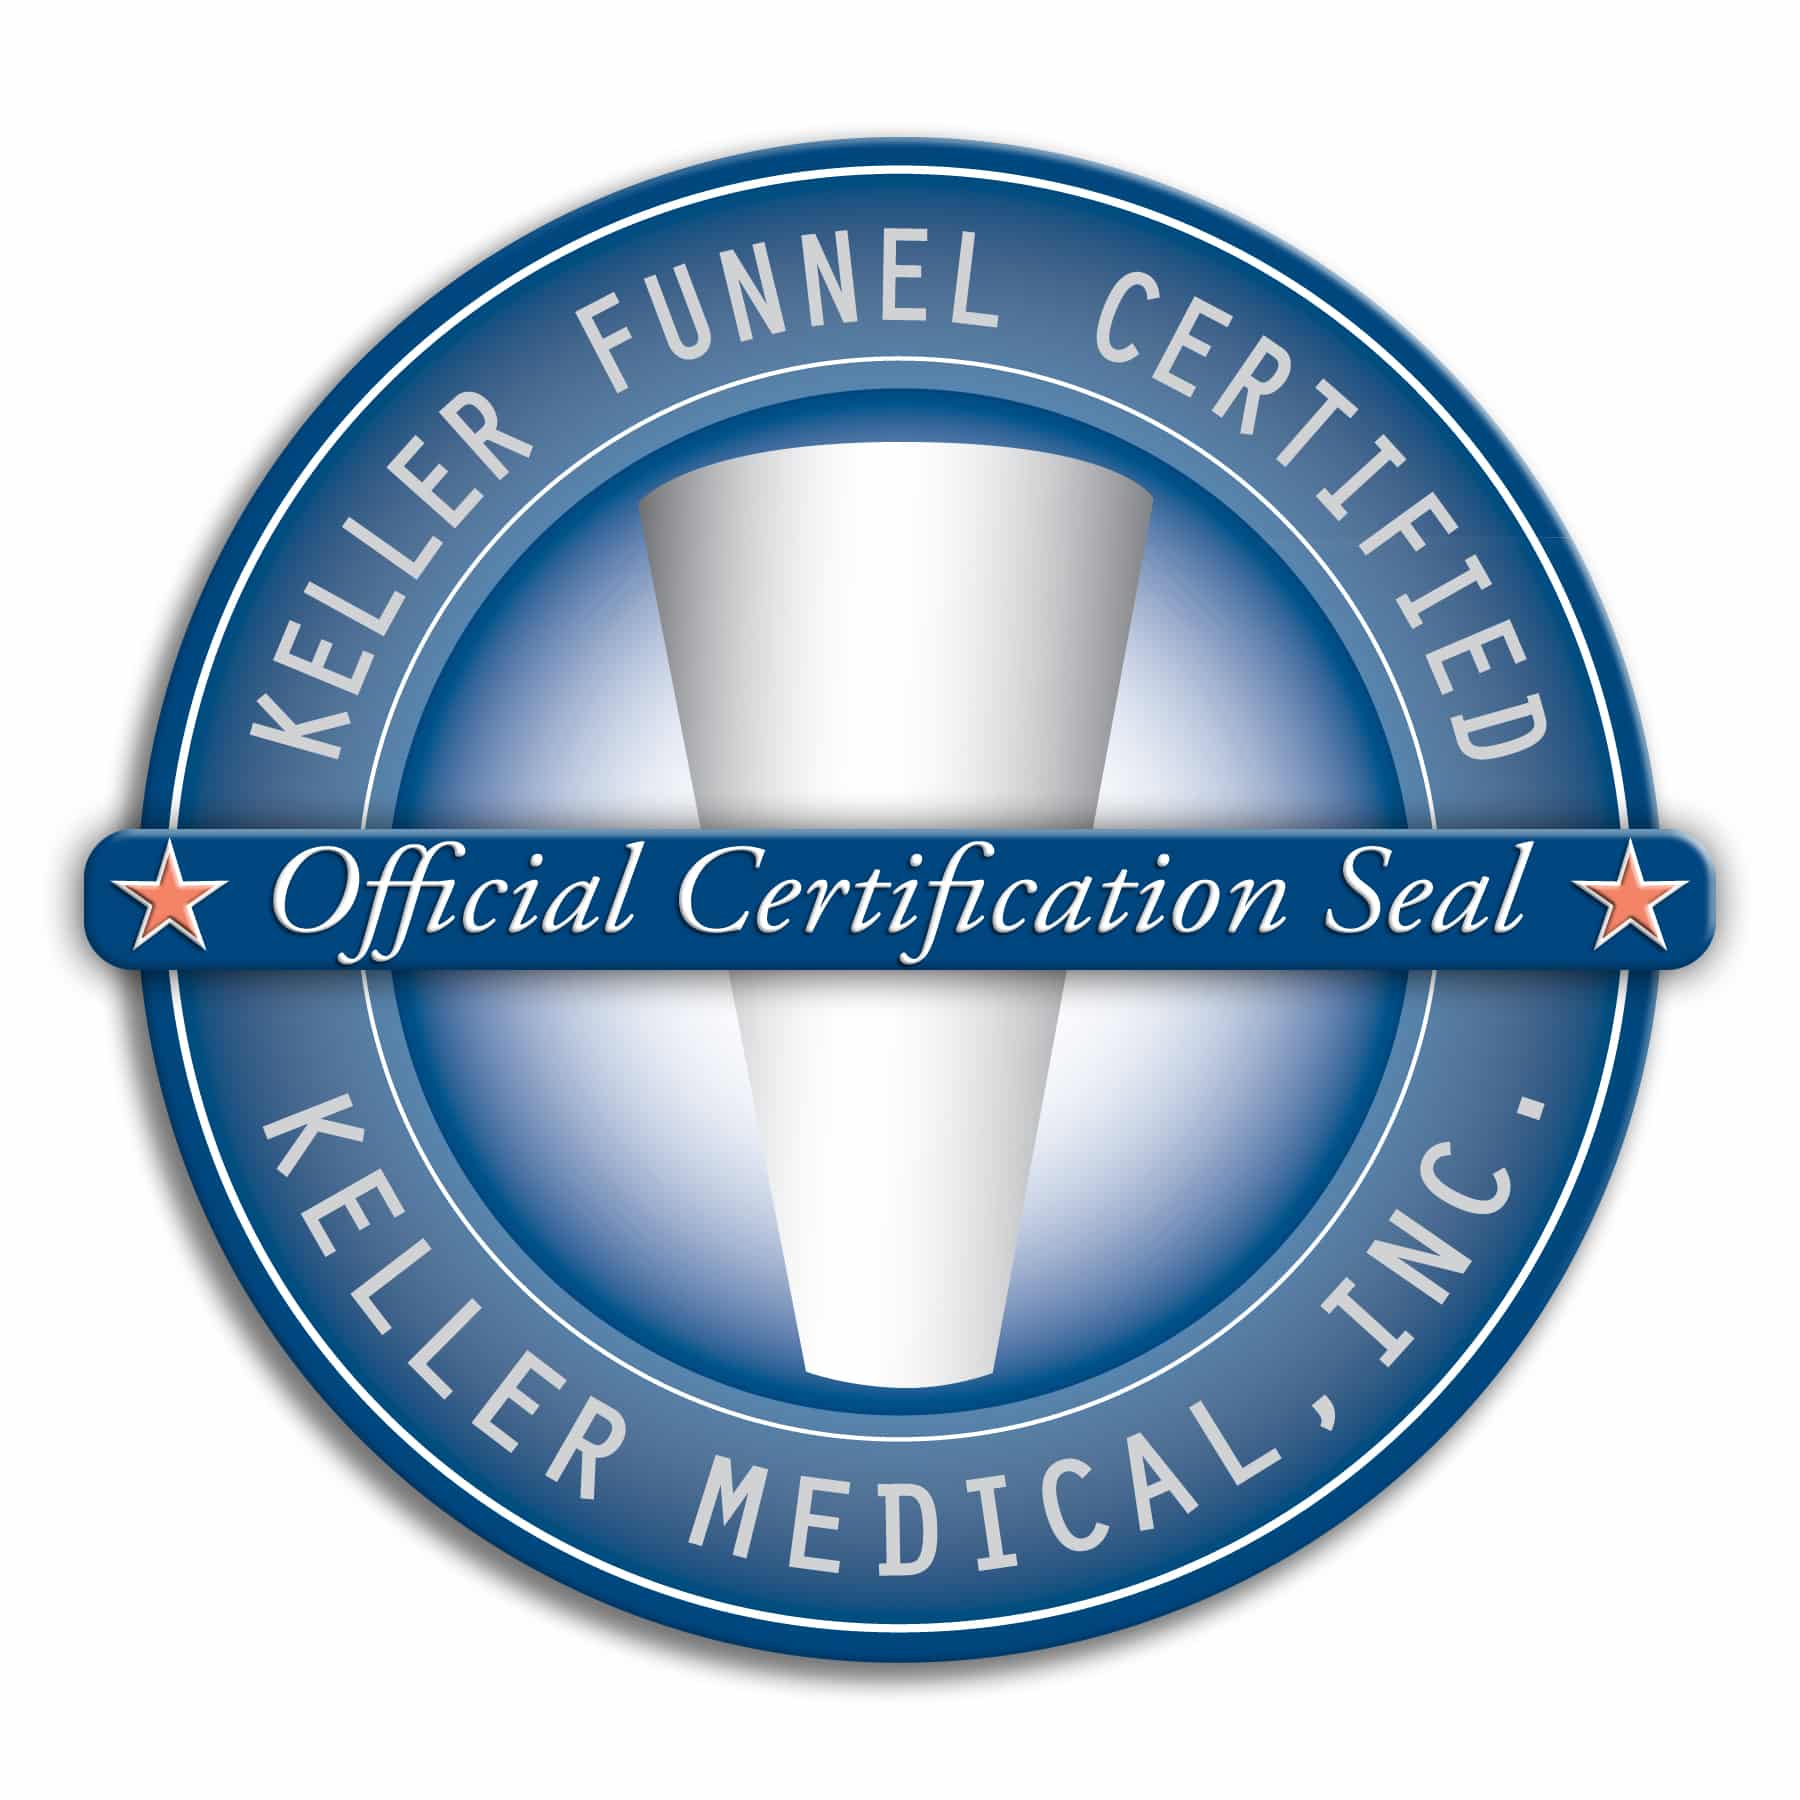 Keller Funnel Breast augmentation technique Certification Seal